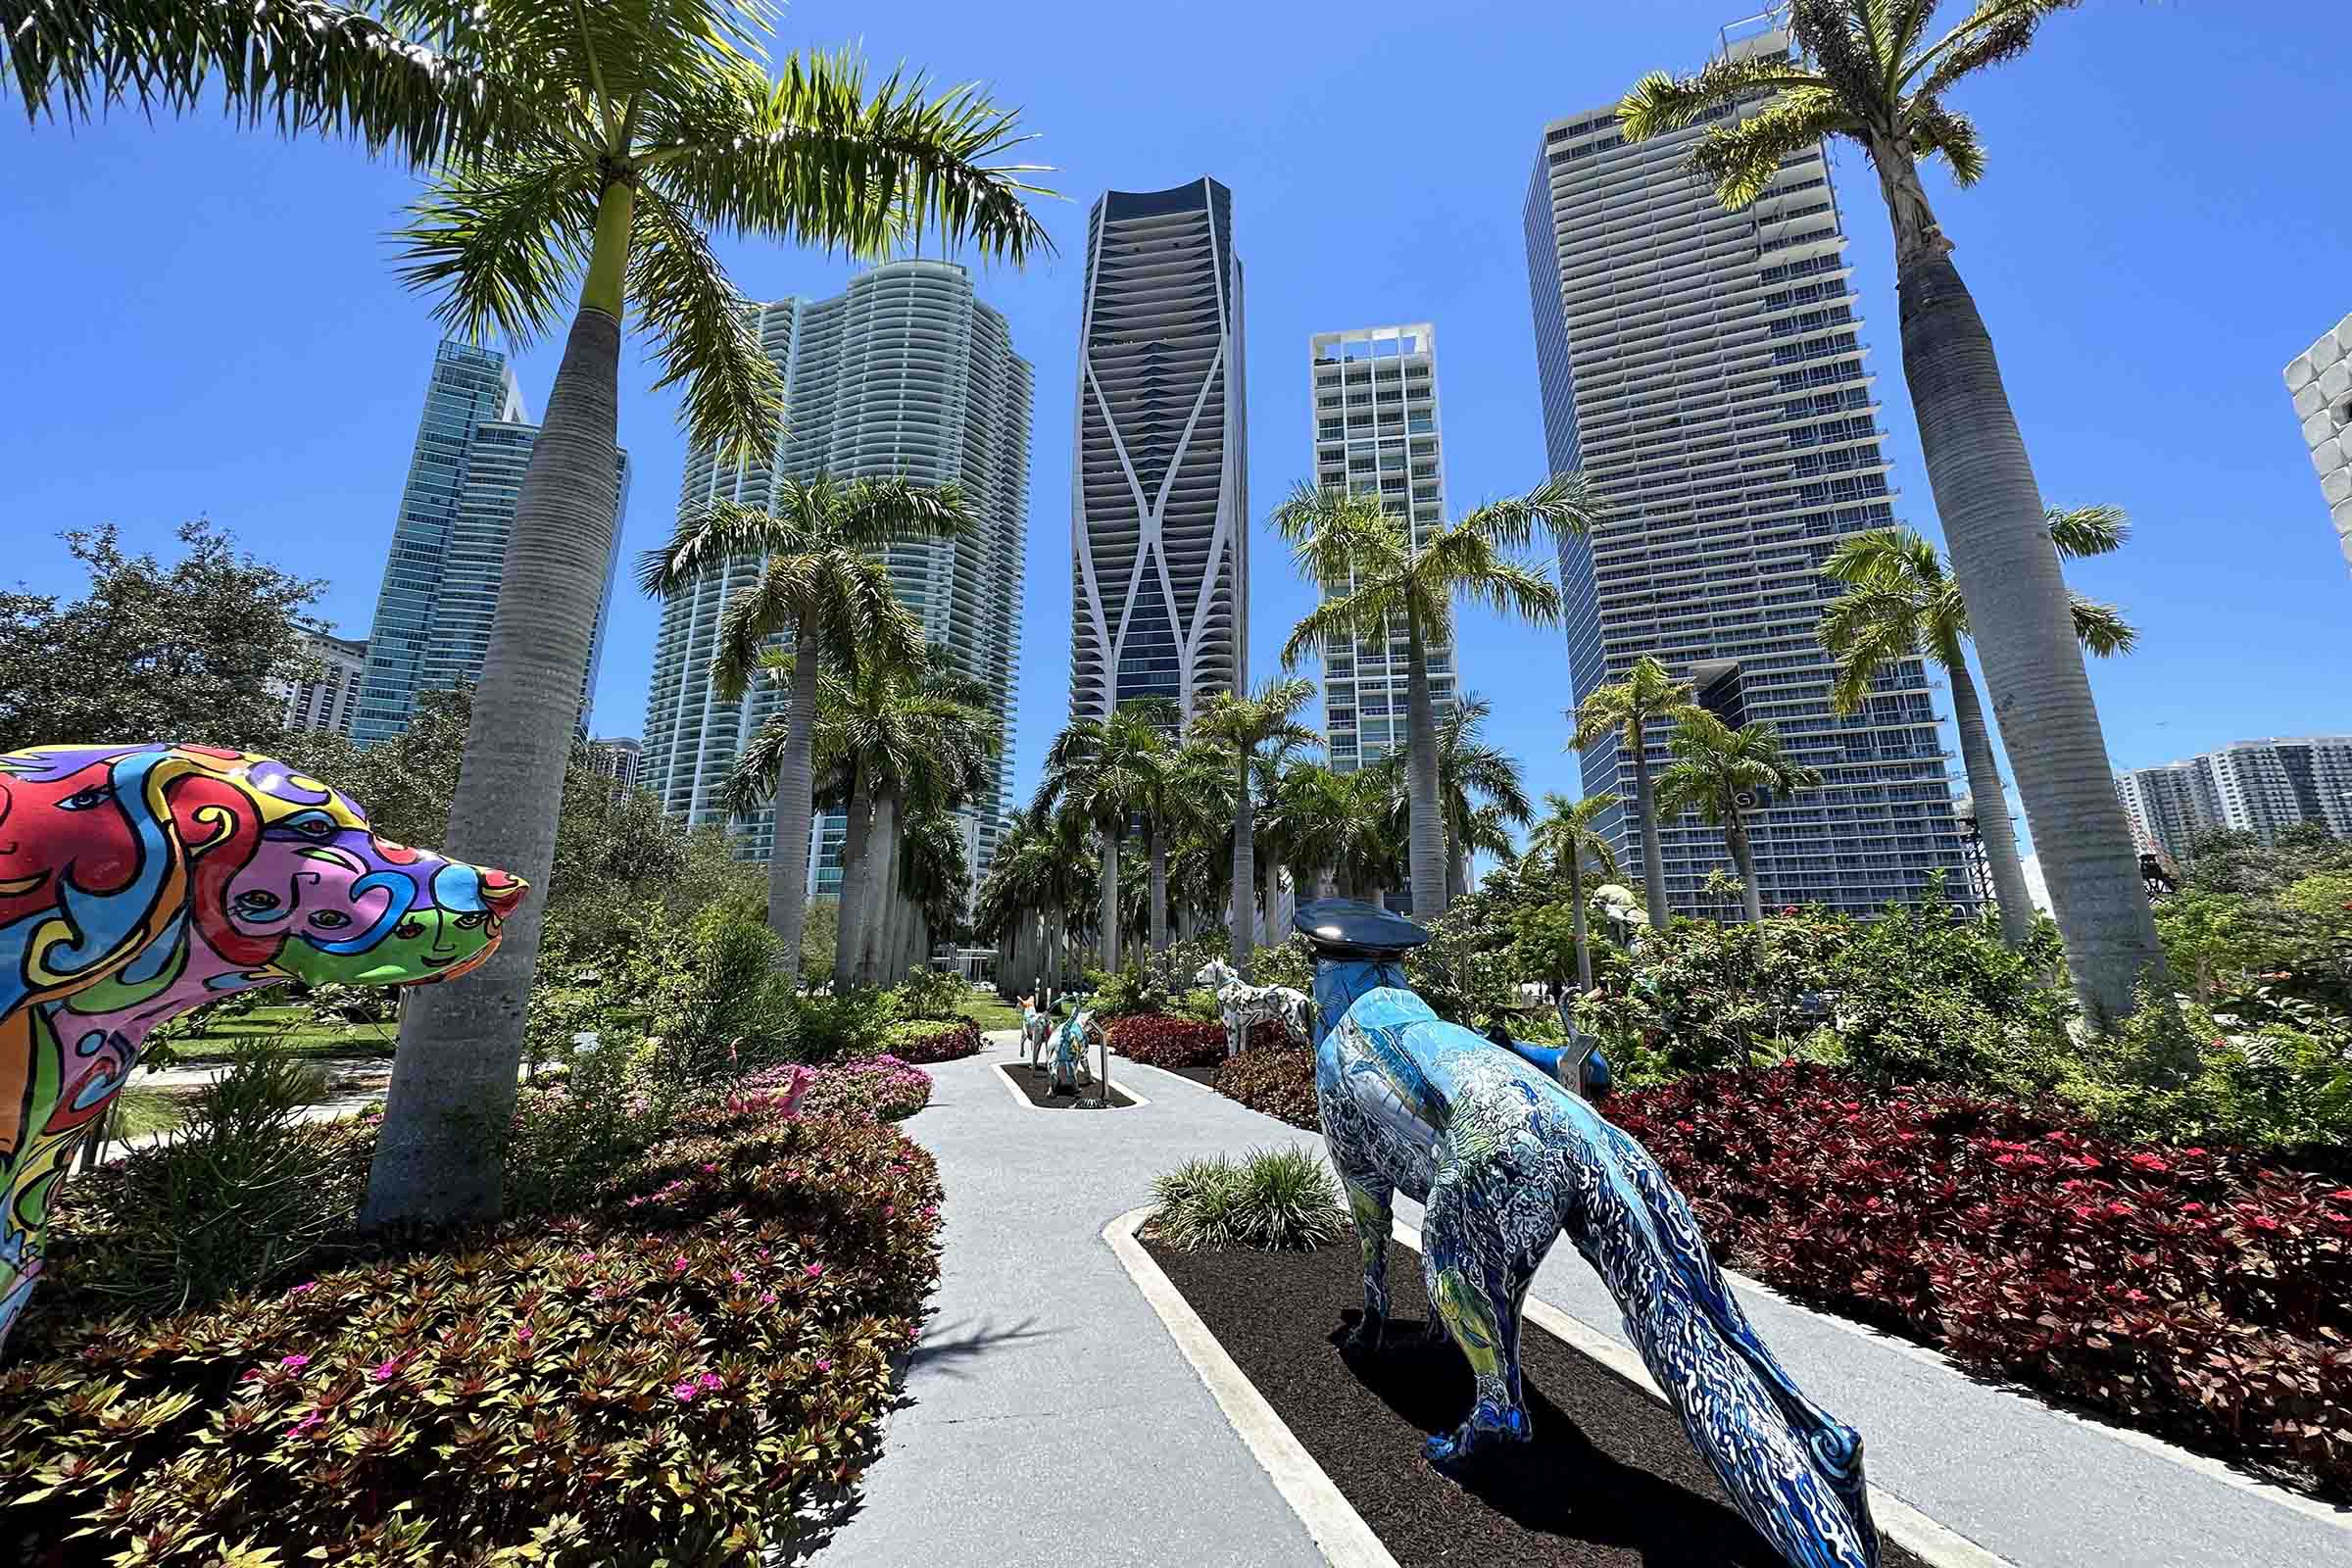 Ferre Park Downtown Miami Sculpture Garden